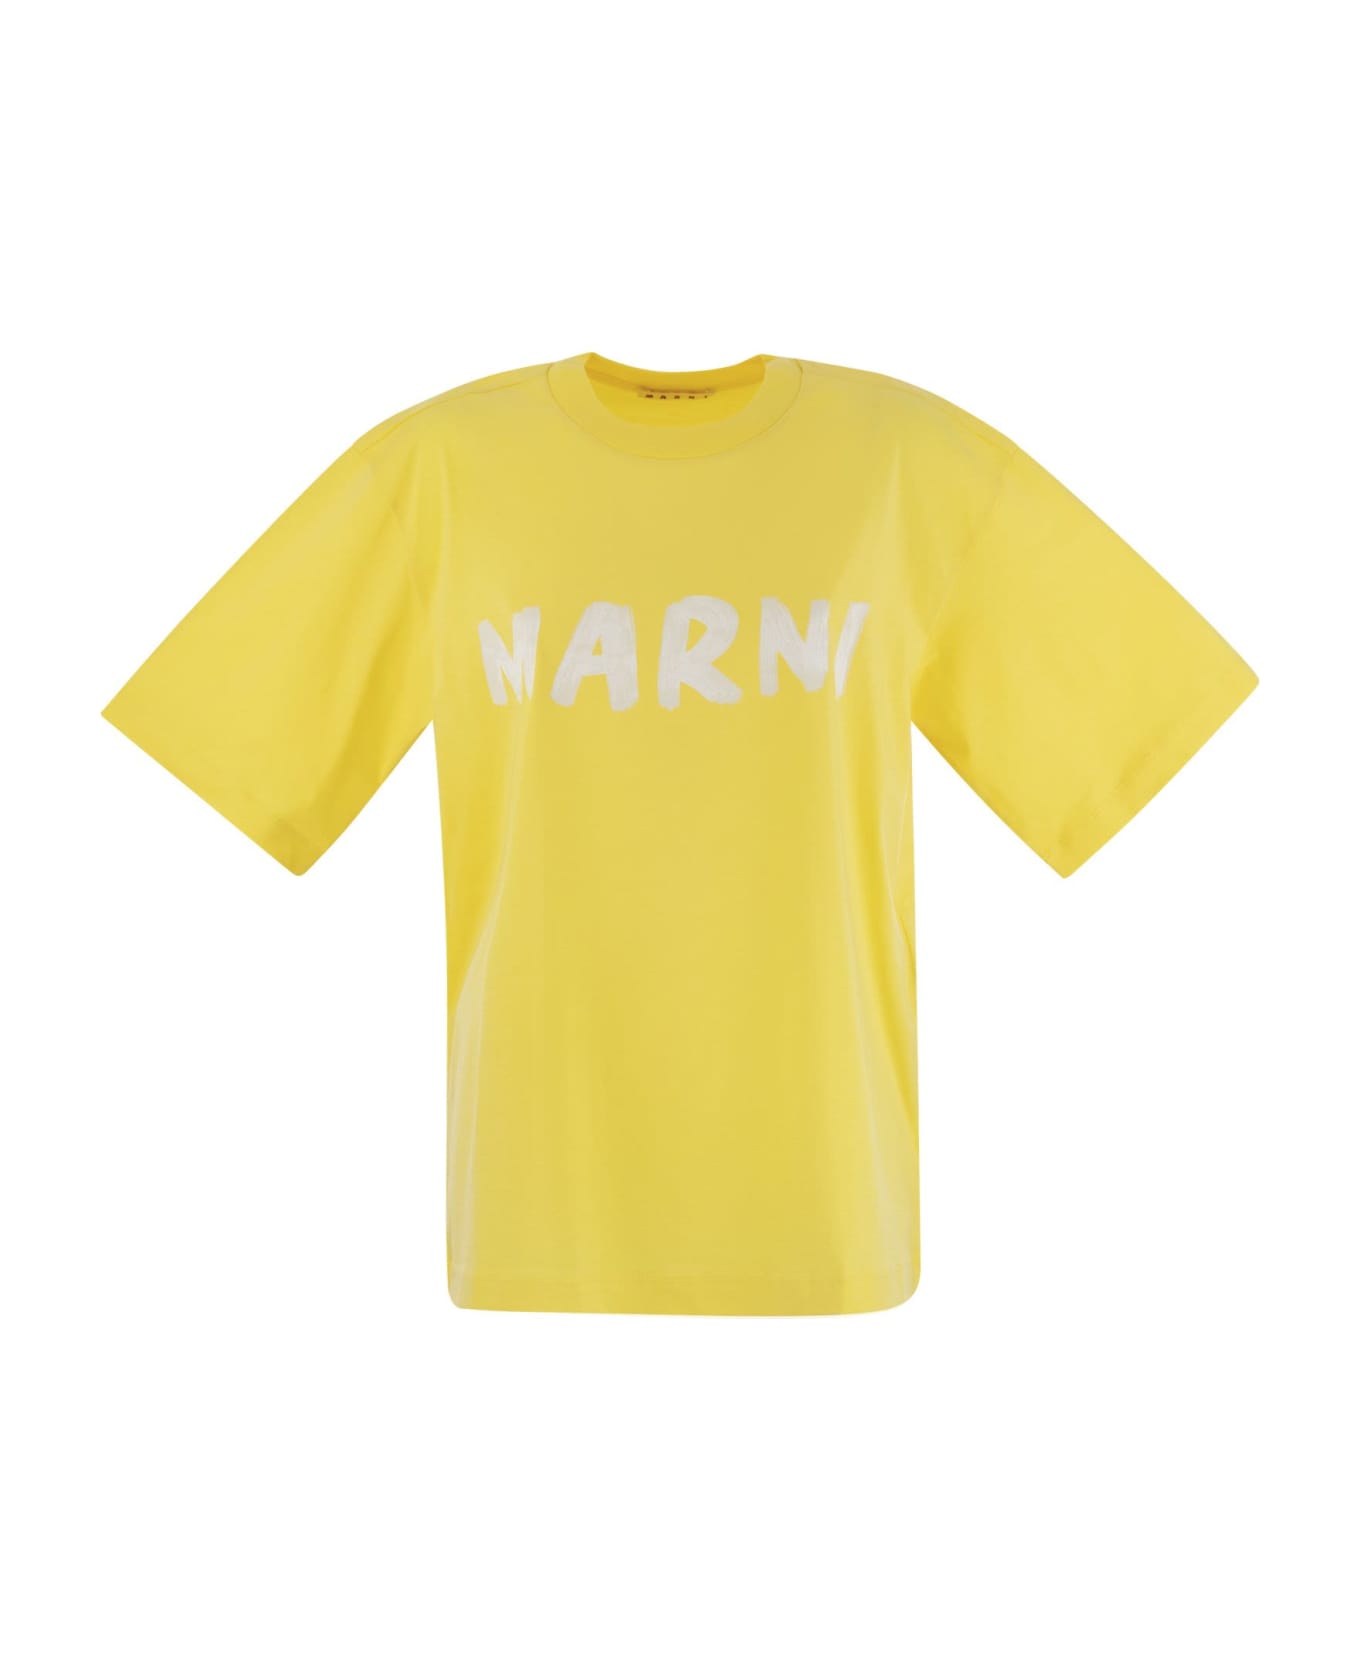 Marni Cotton Jersey T-shirt With Marni Print - Yellow Tシャツ